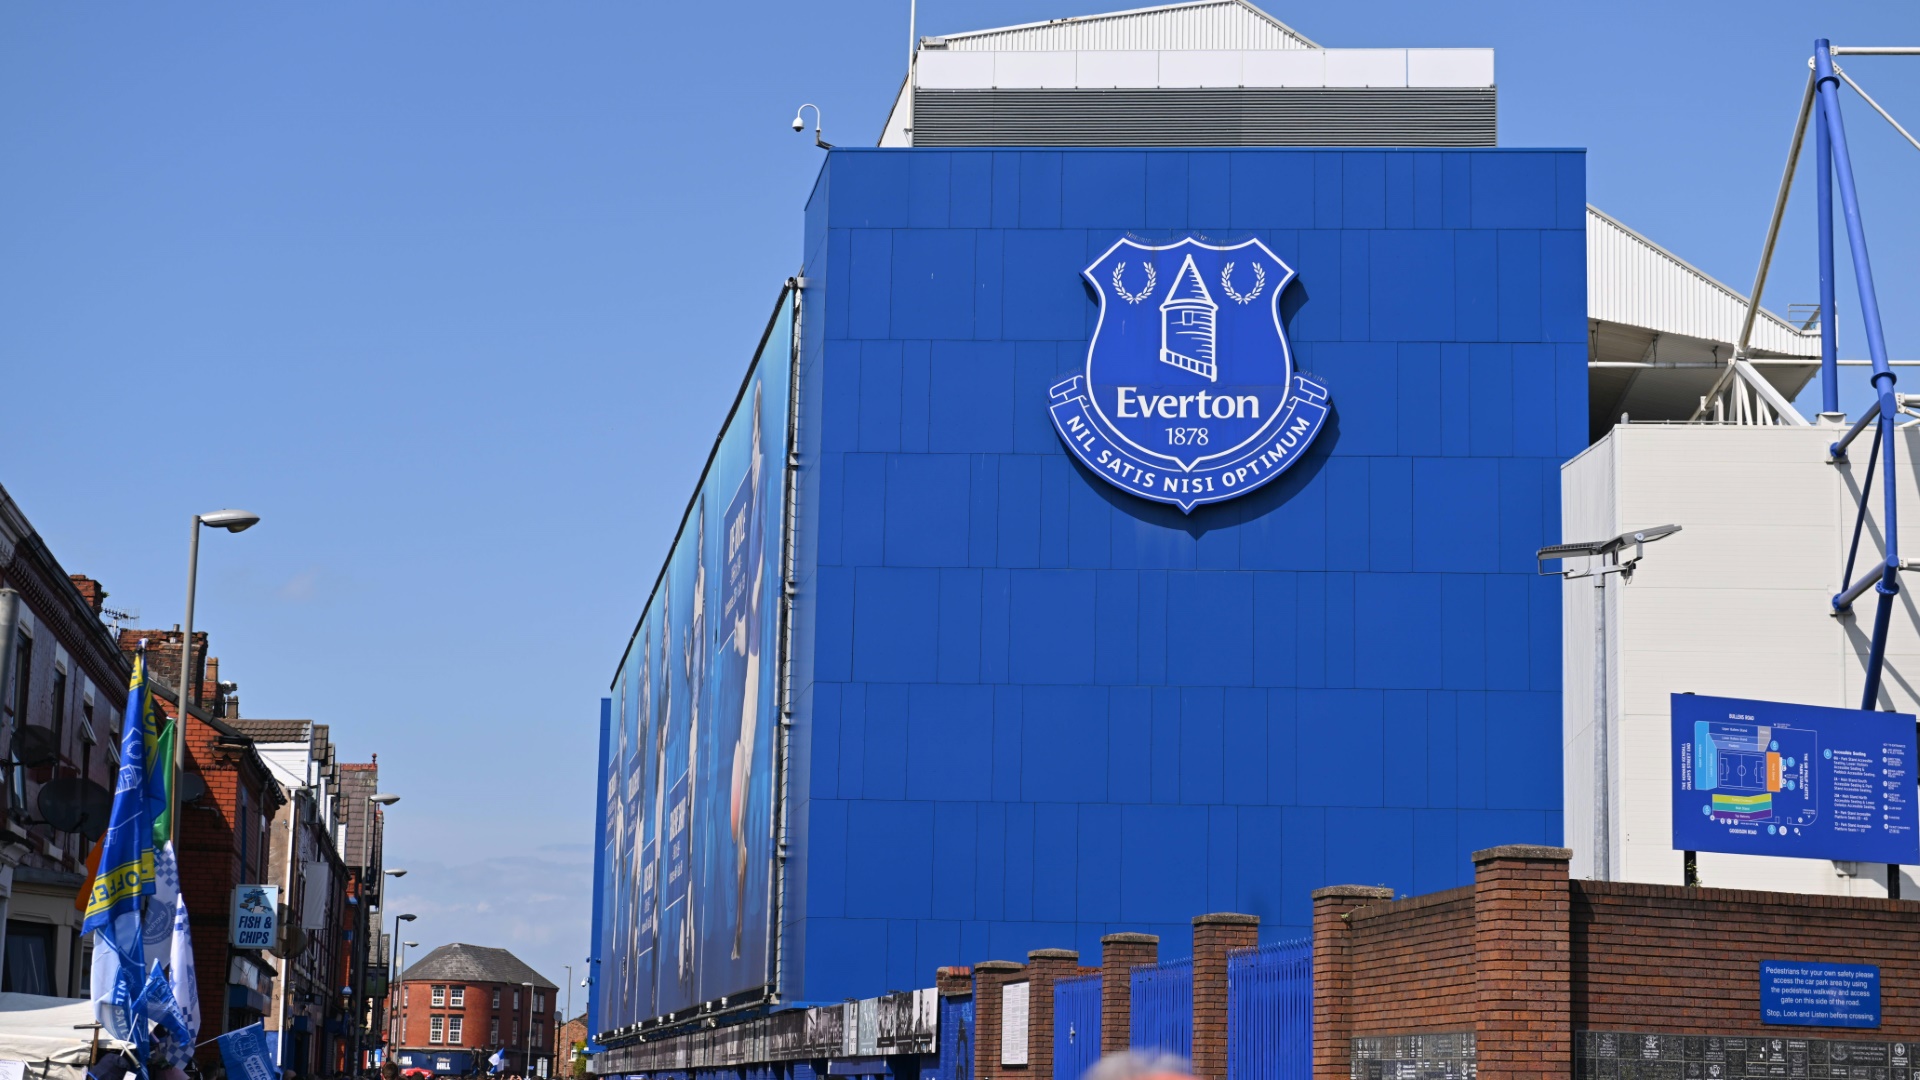 Everton will gegen die Rekordstrafe in Berufung gehen